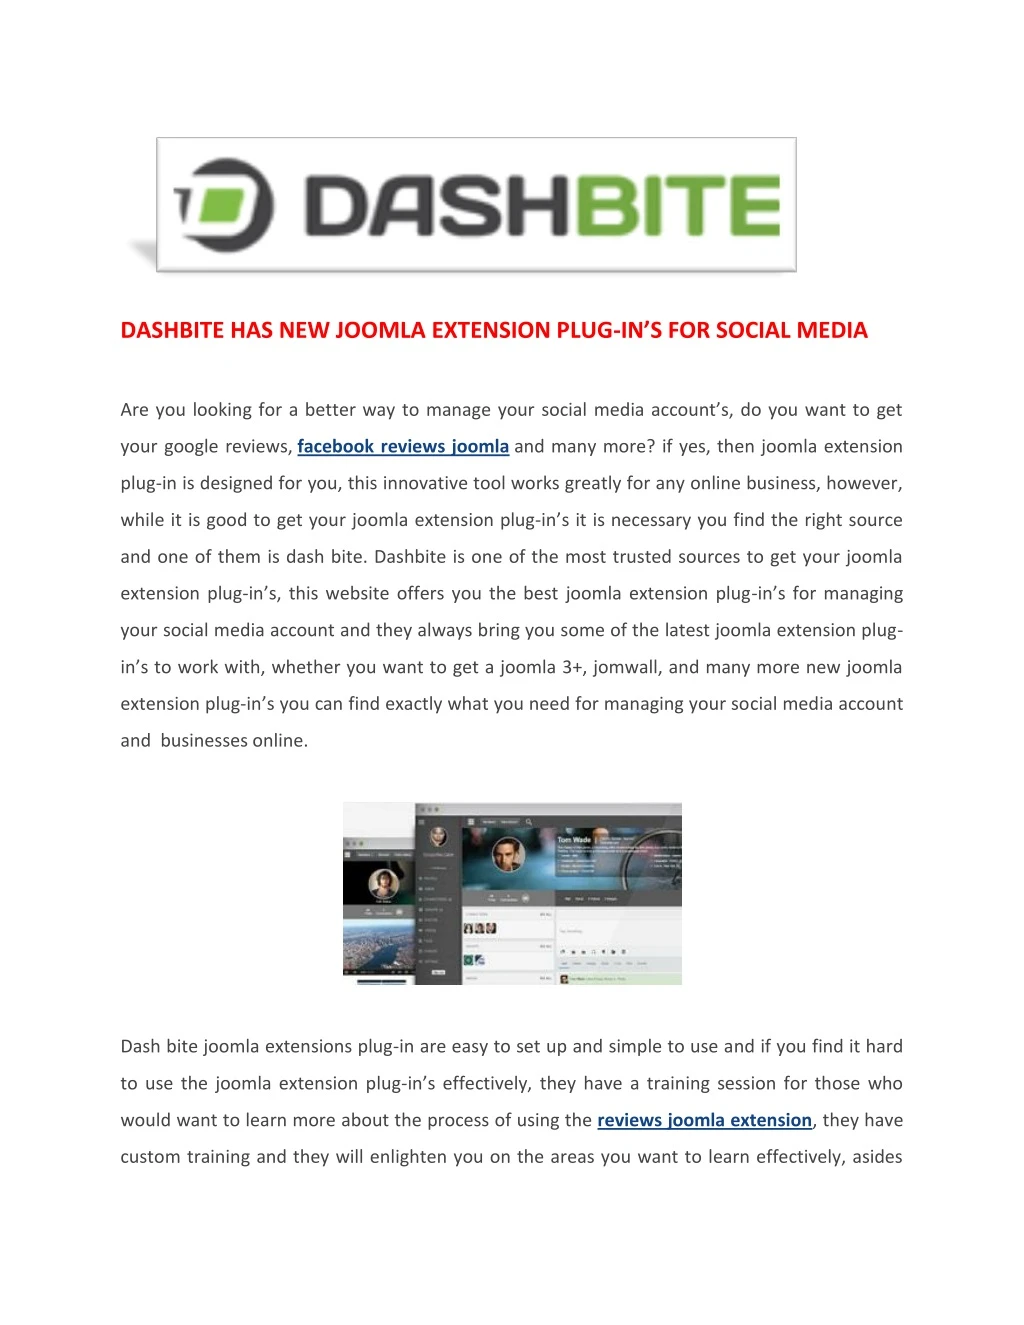 dashbite has new joomla extension plug